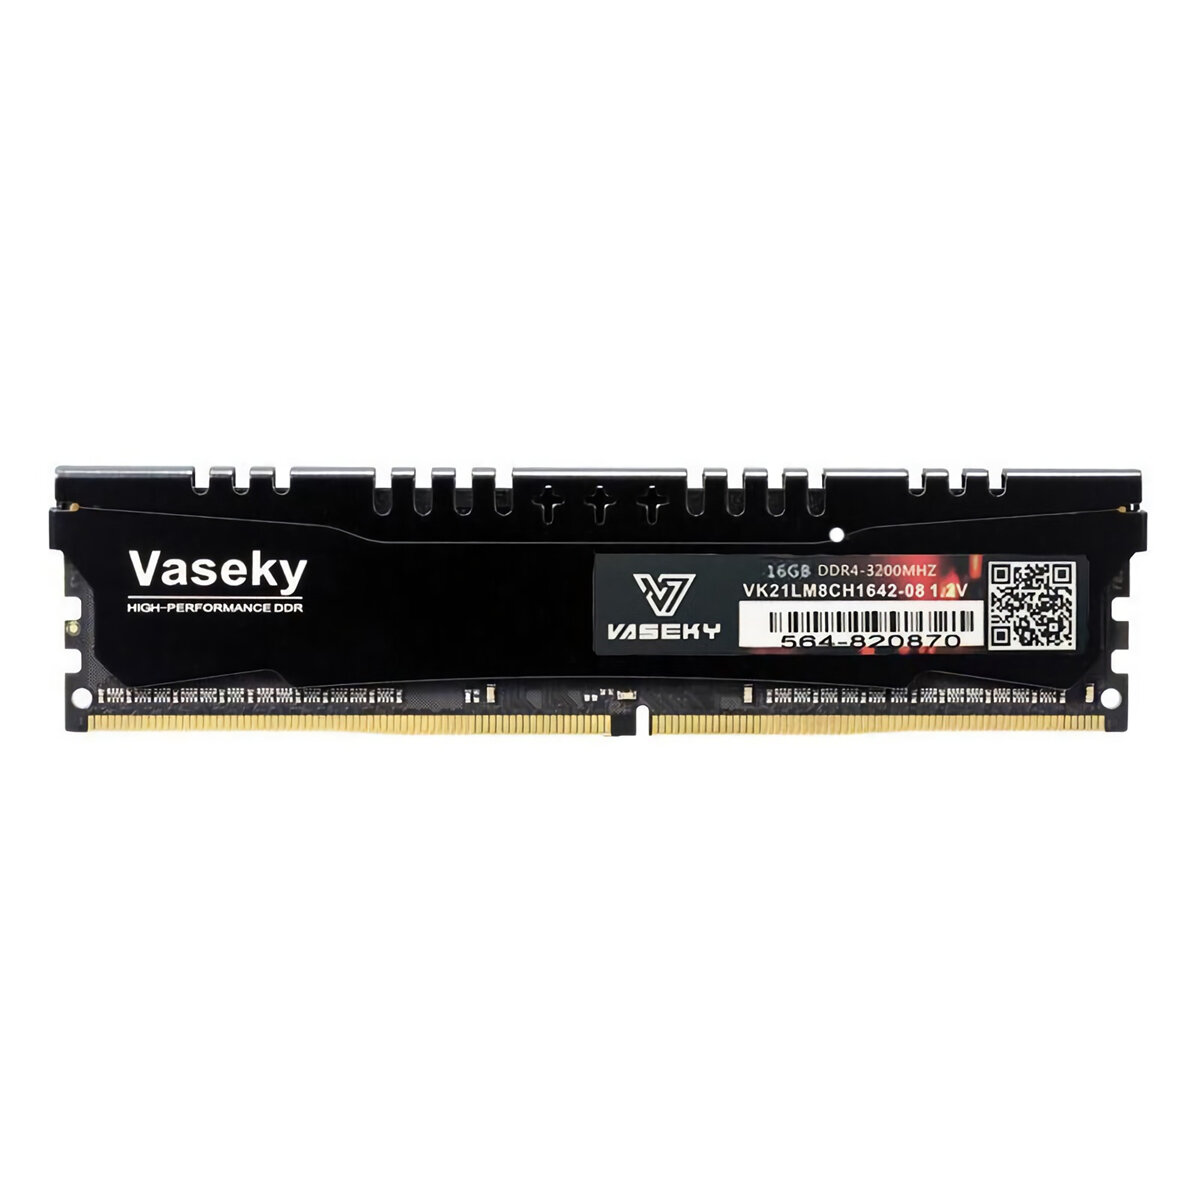 

Vaseky DDR4 16GB 3200Mhz RAM Memory 288Pin Memory Card Stick for Desktop Computer PC